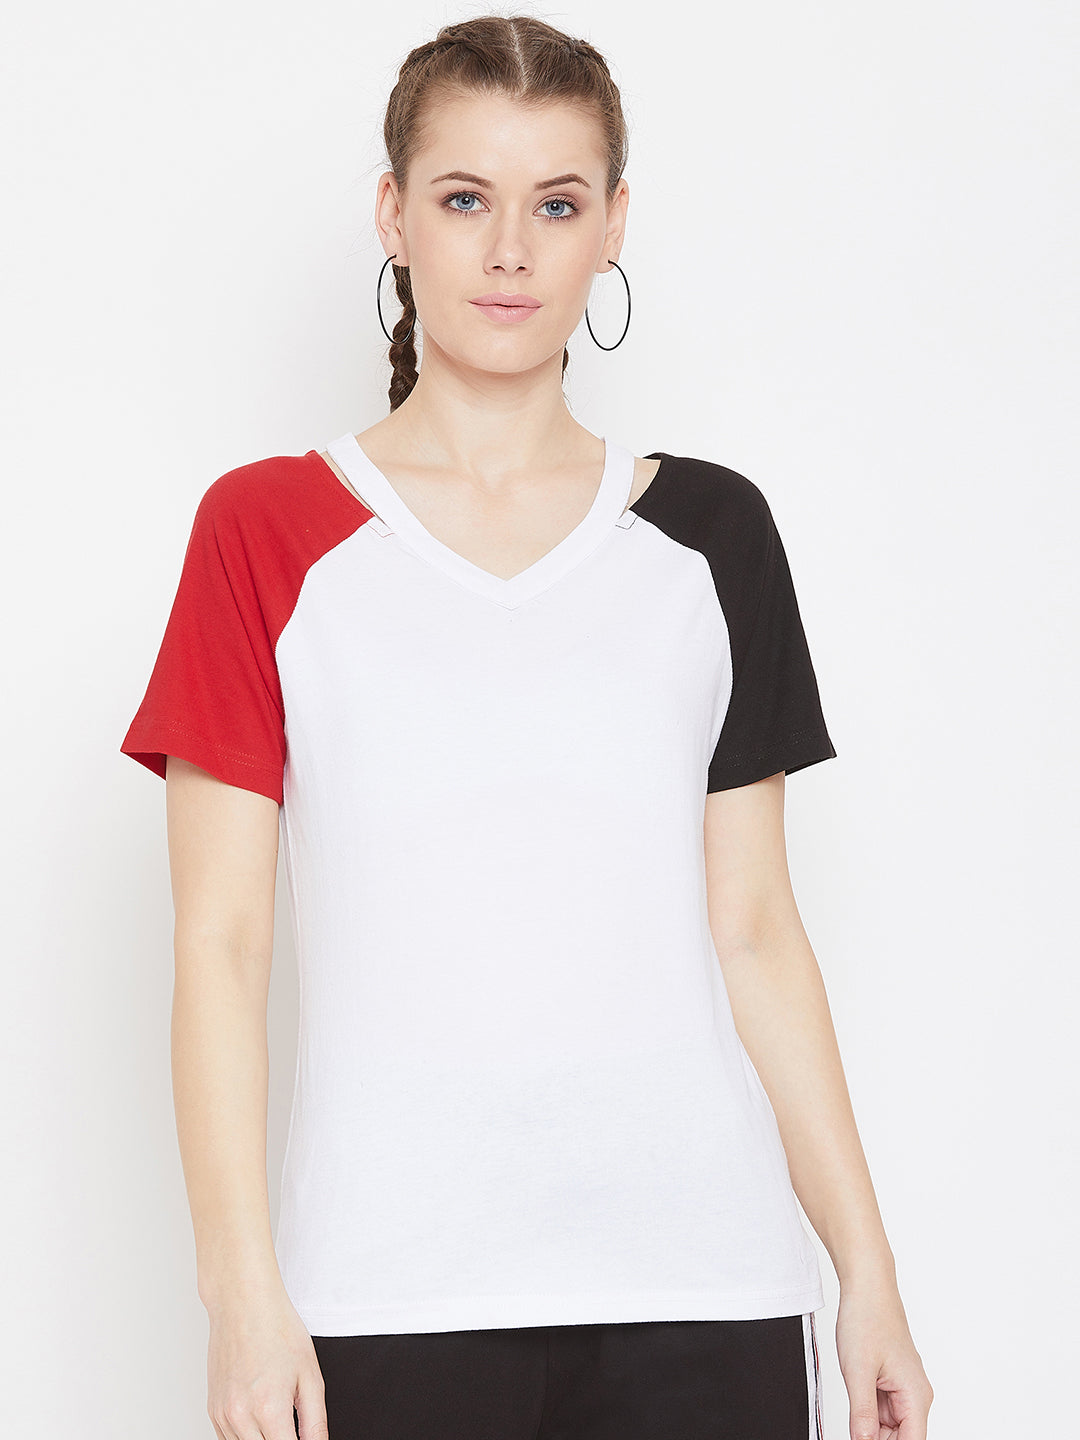 White/Black/Red Half Sleeve V Neck Top